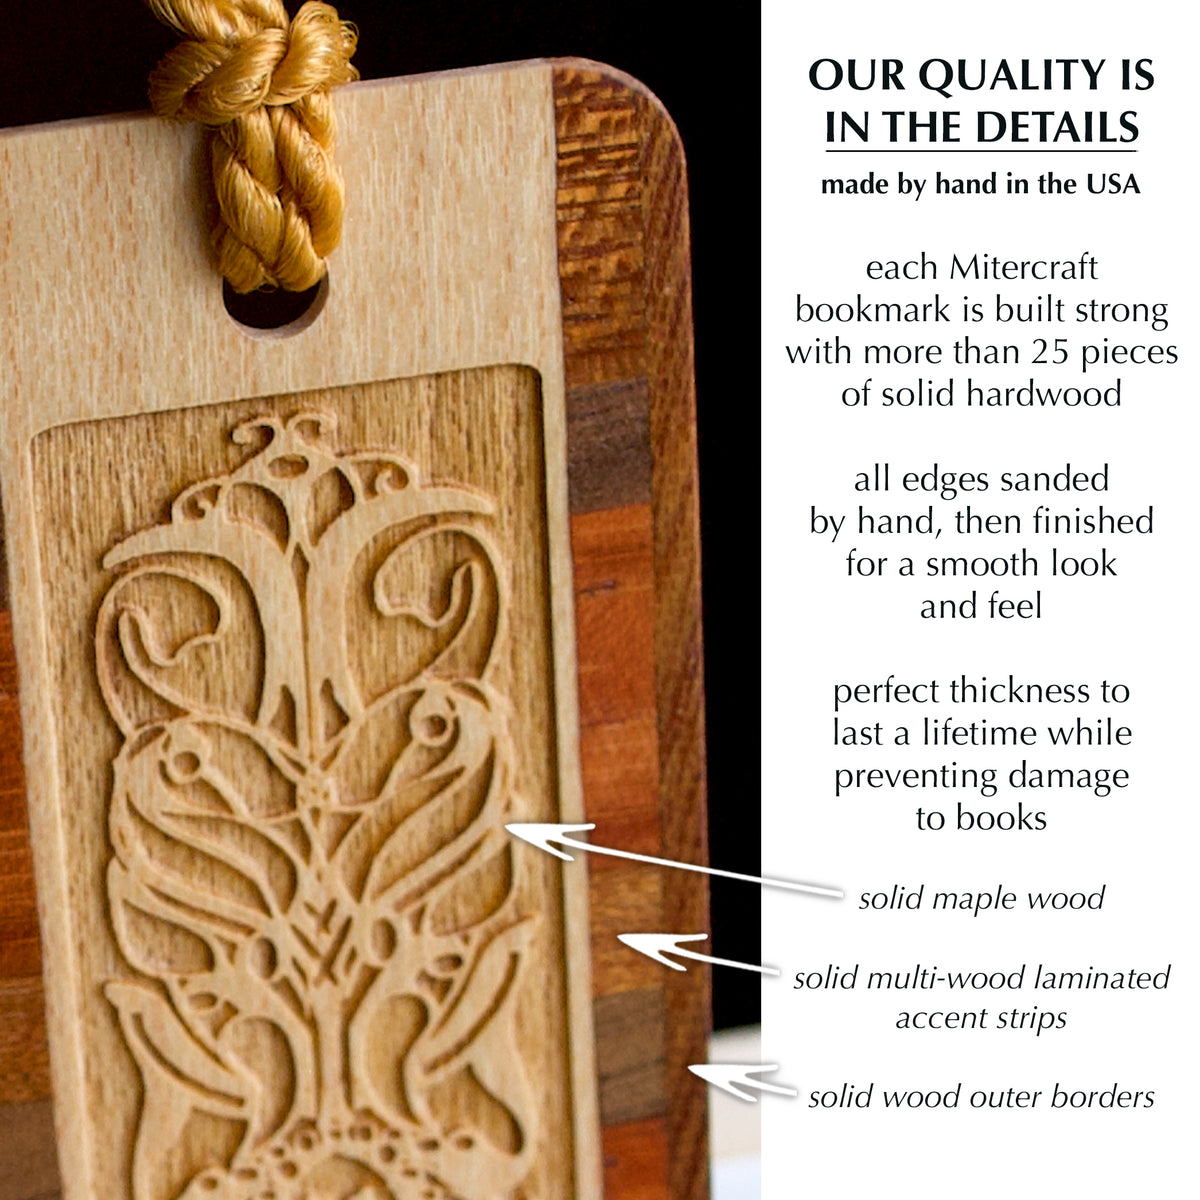 Fandom Inspired Wooden Bookmarks